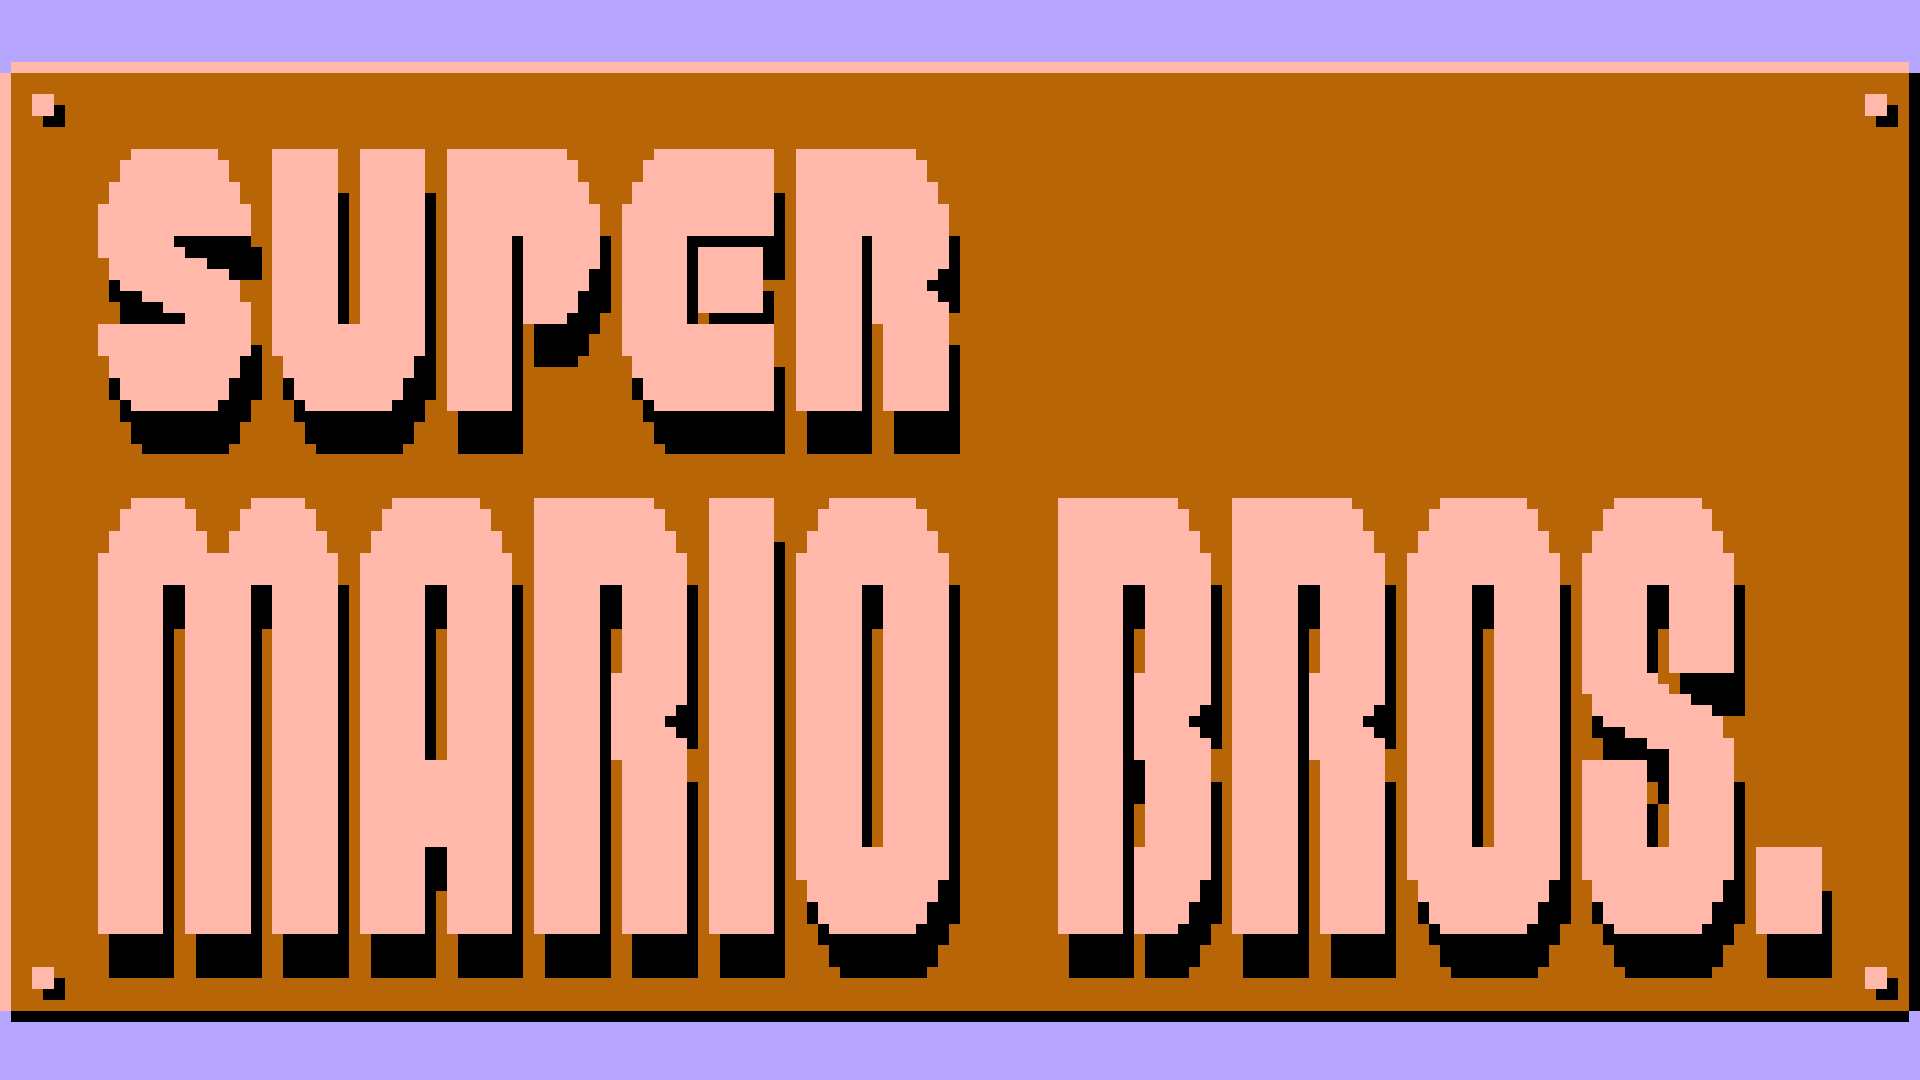 Super Mario Bros. Logo